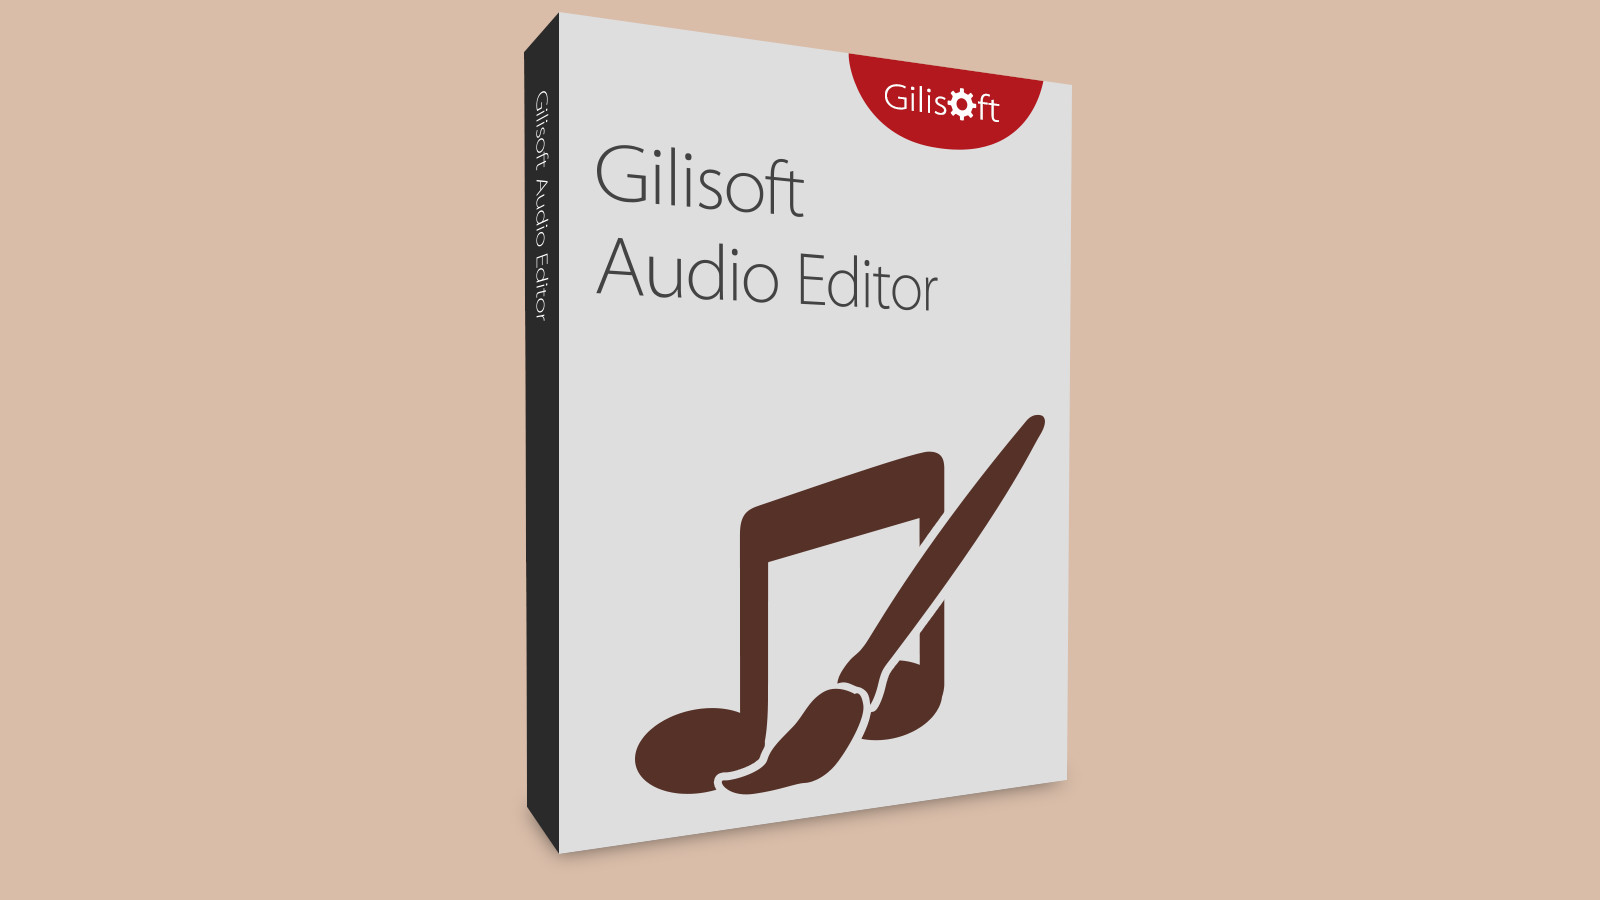 Gilisoft Audio Editor CD Key $16.5